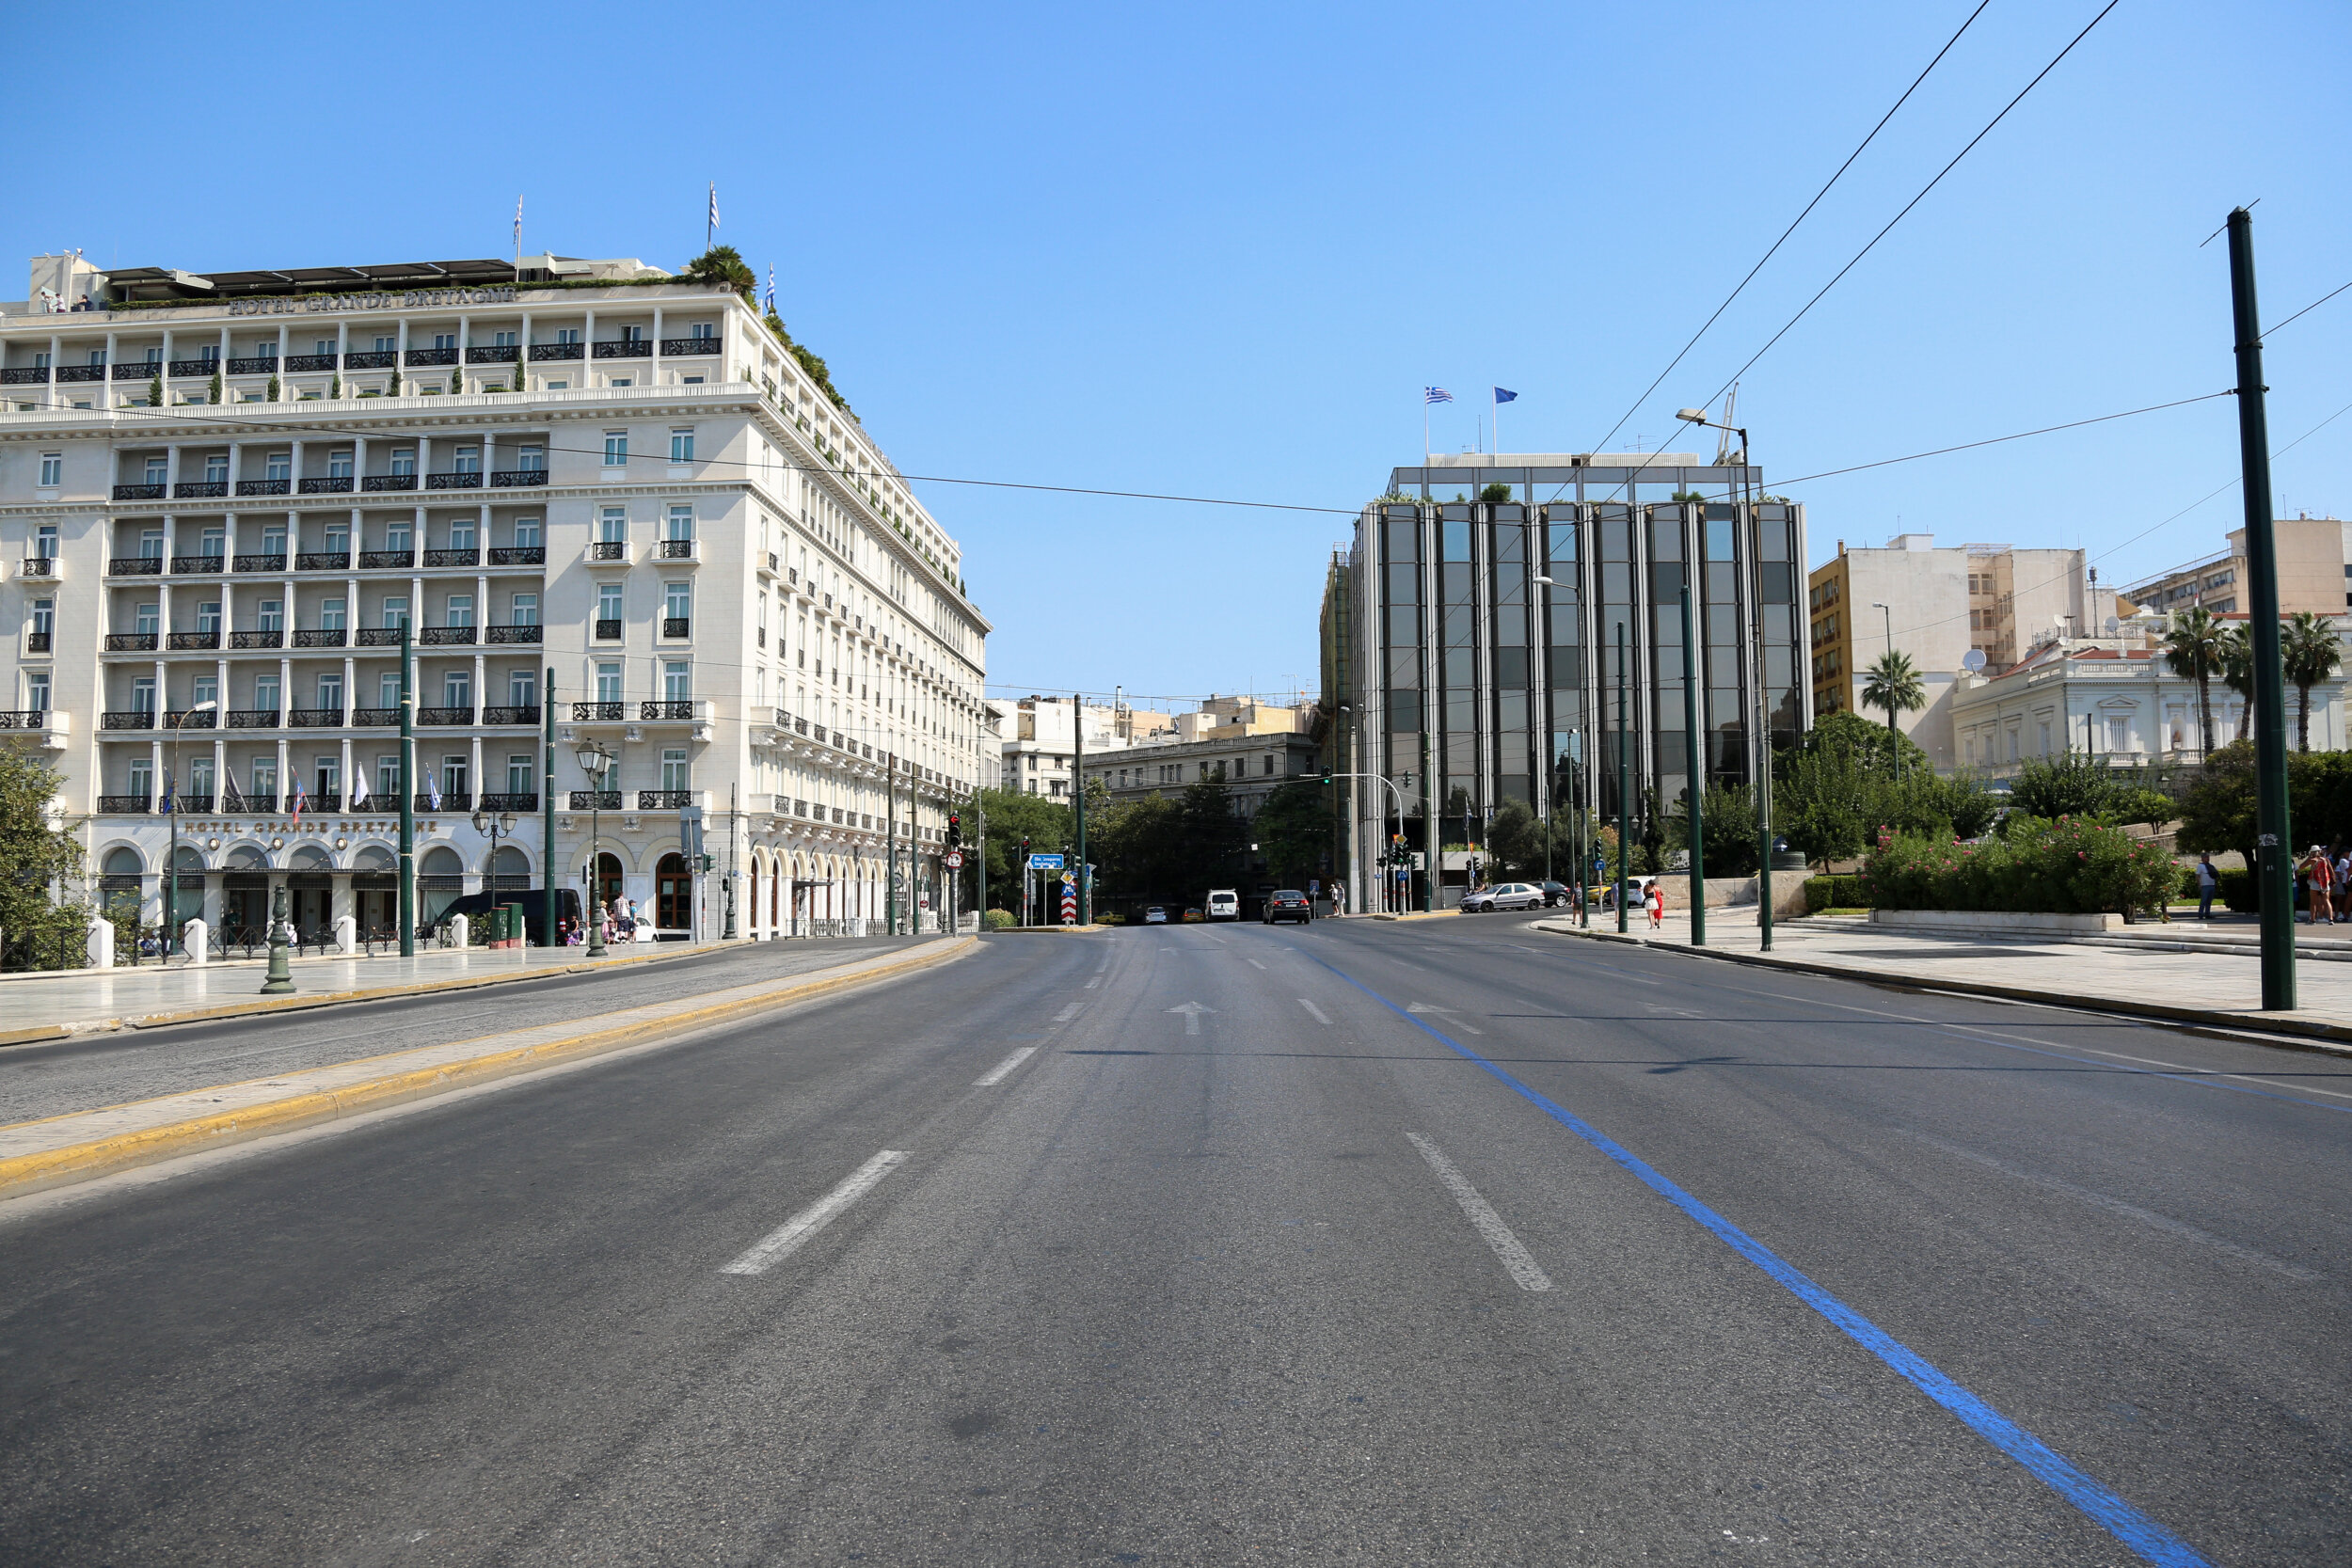 More information about "Απαγόρευση μετακίνησης στο κέντρο της Αθήνας: Μόνο με SMS η πρόσβαση από 15 Ιουνίου"